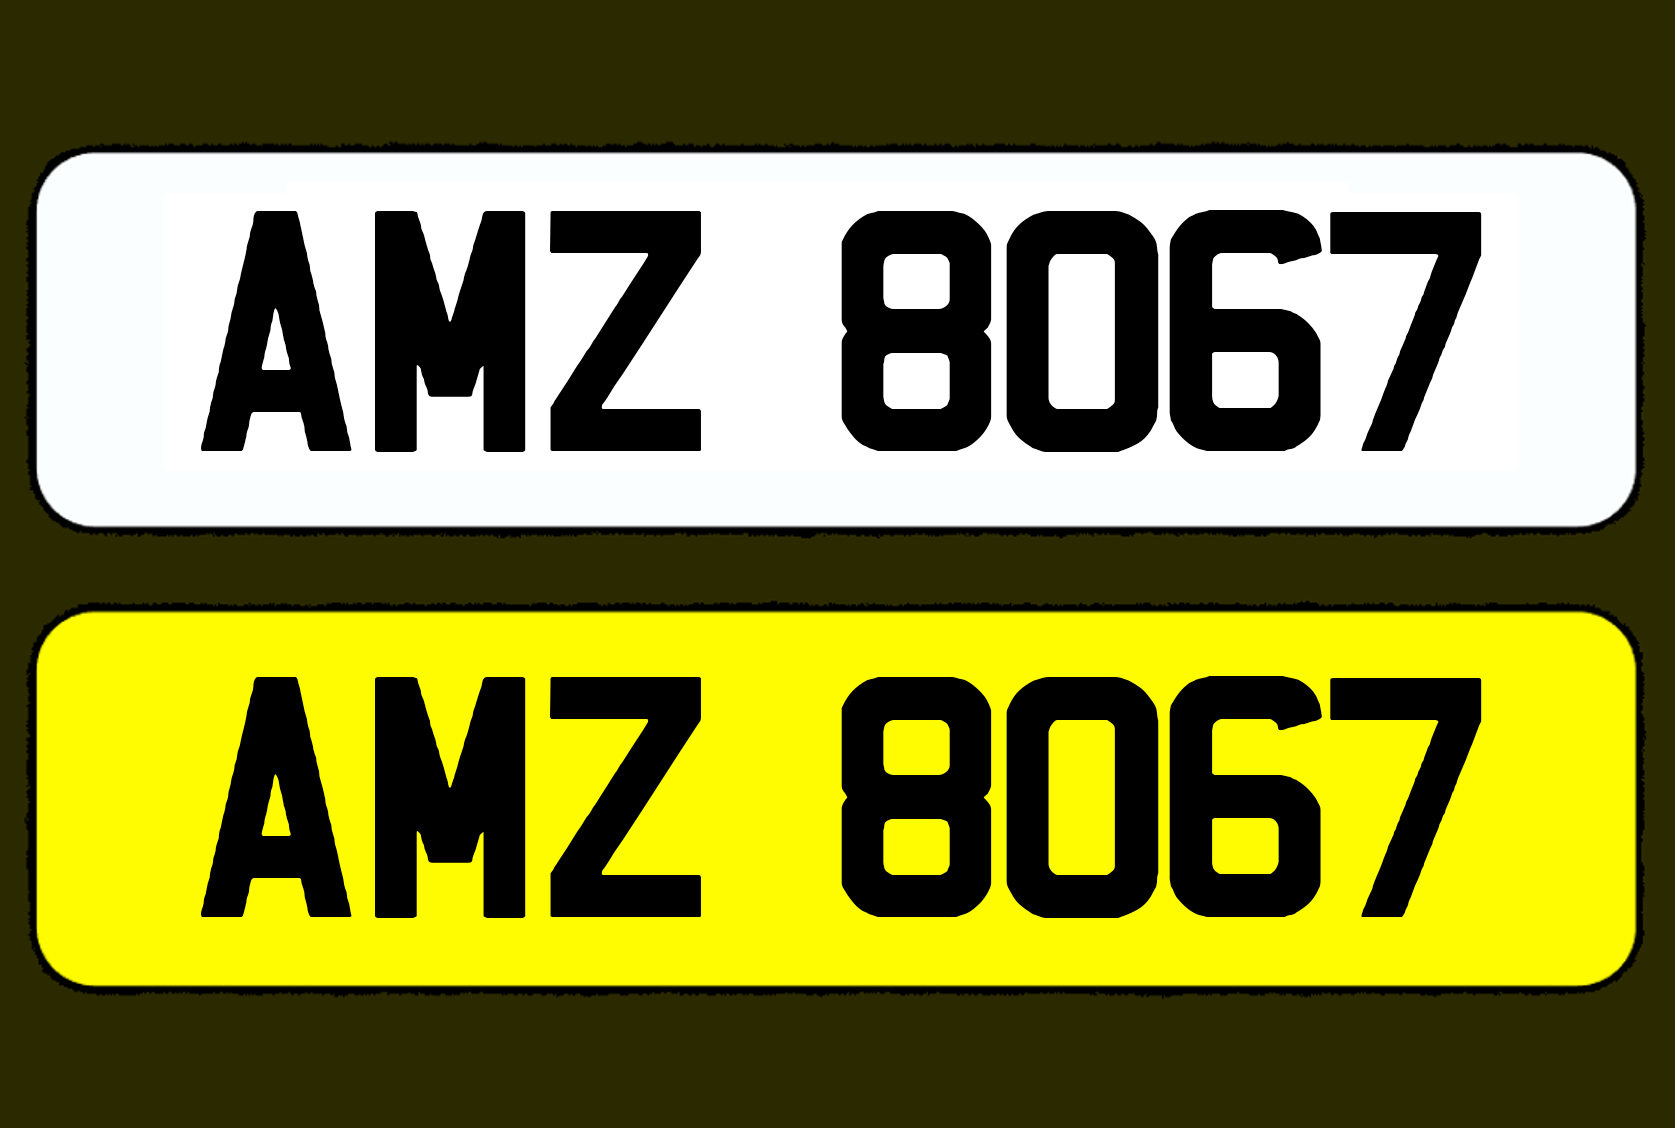 AMZ 8067